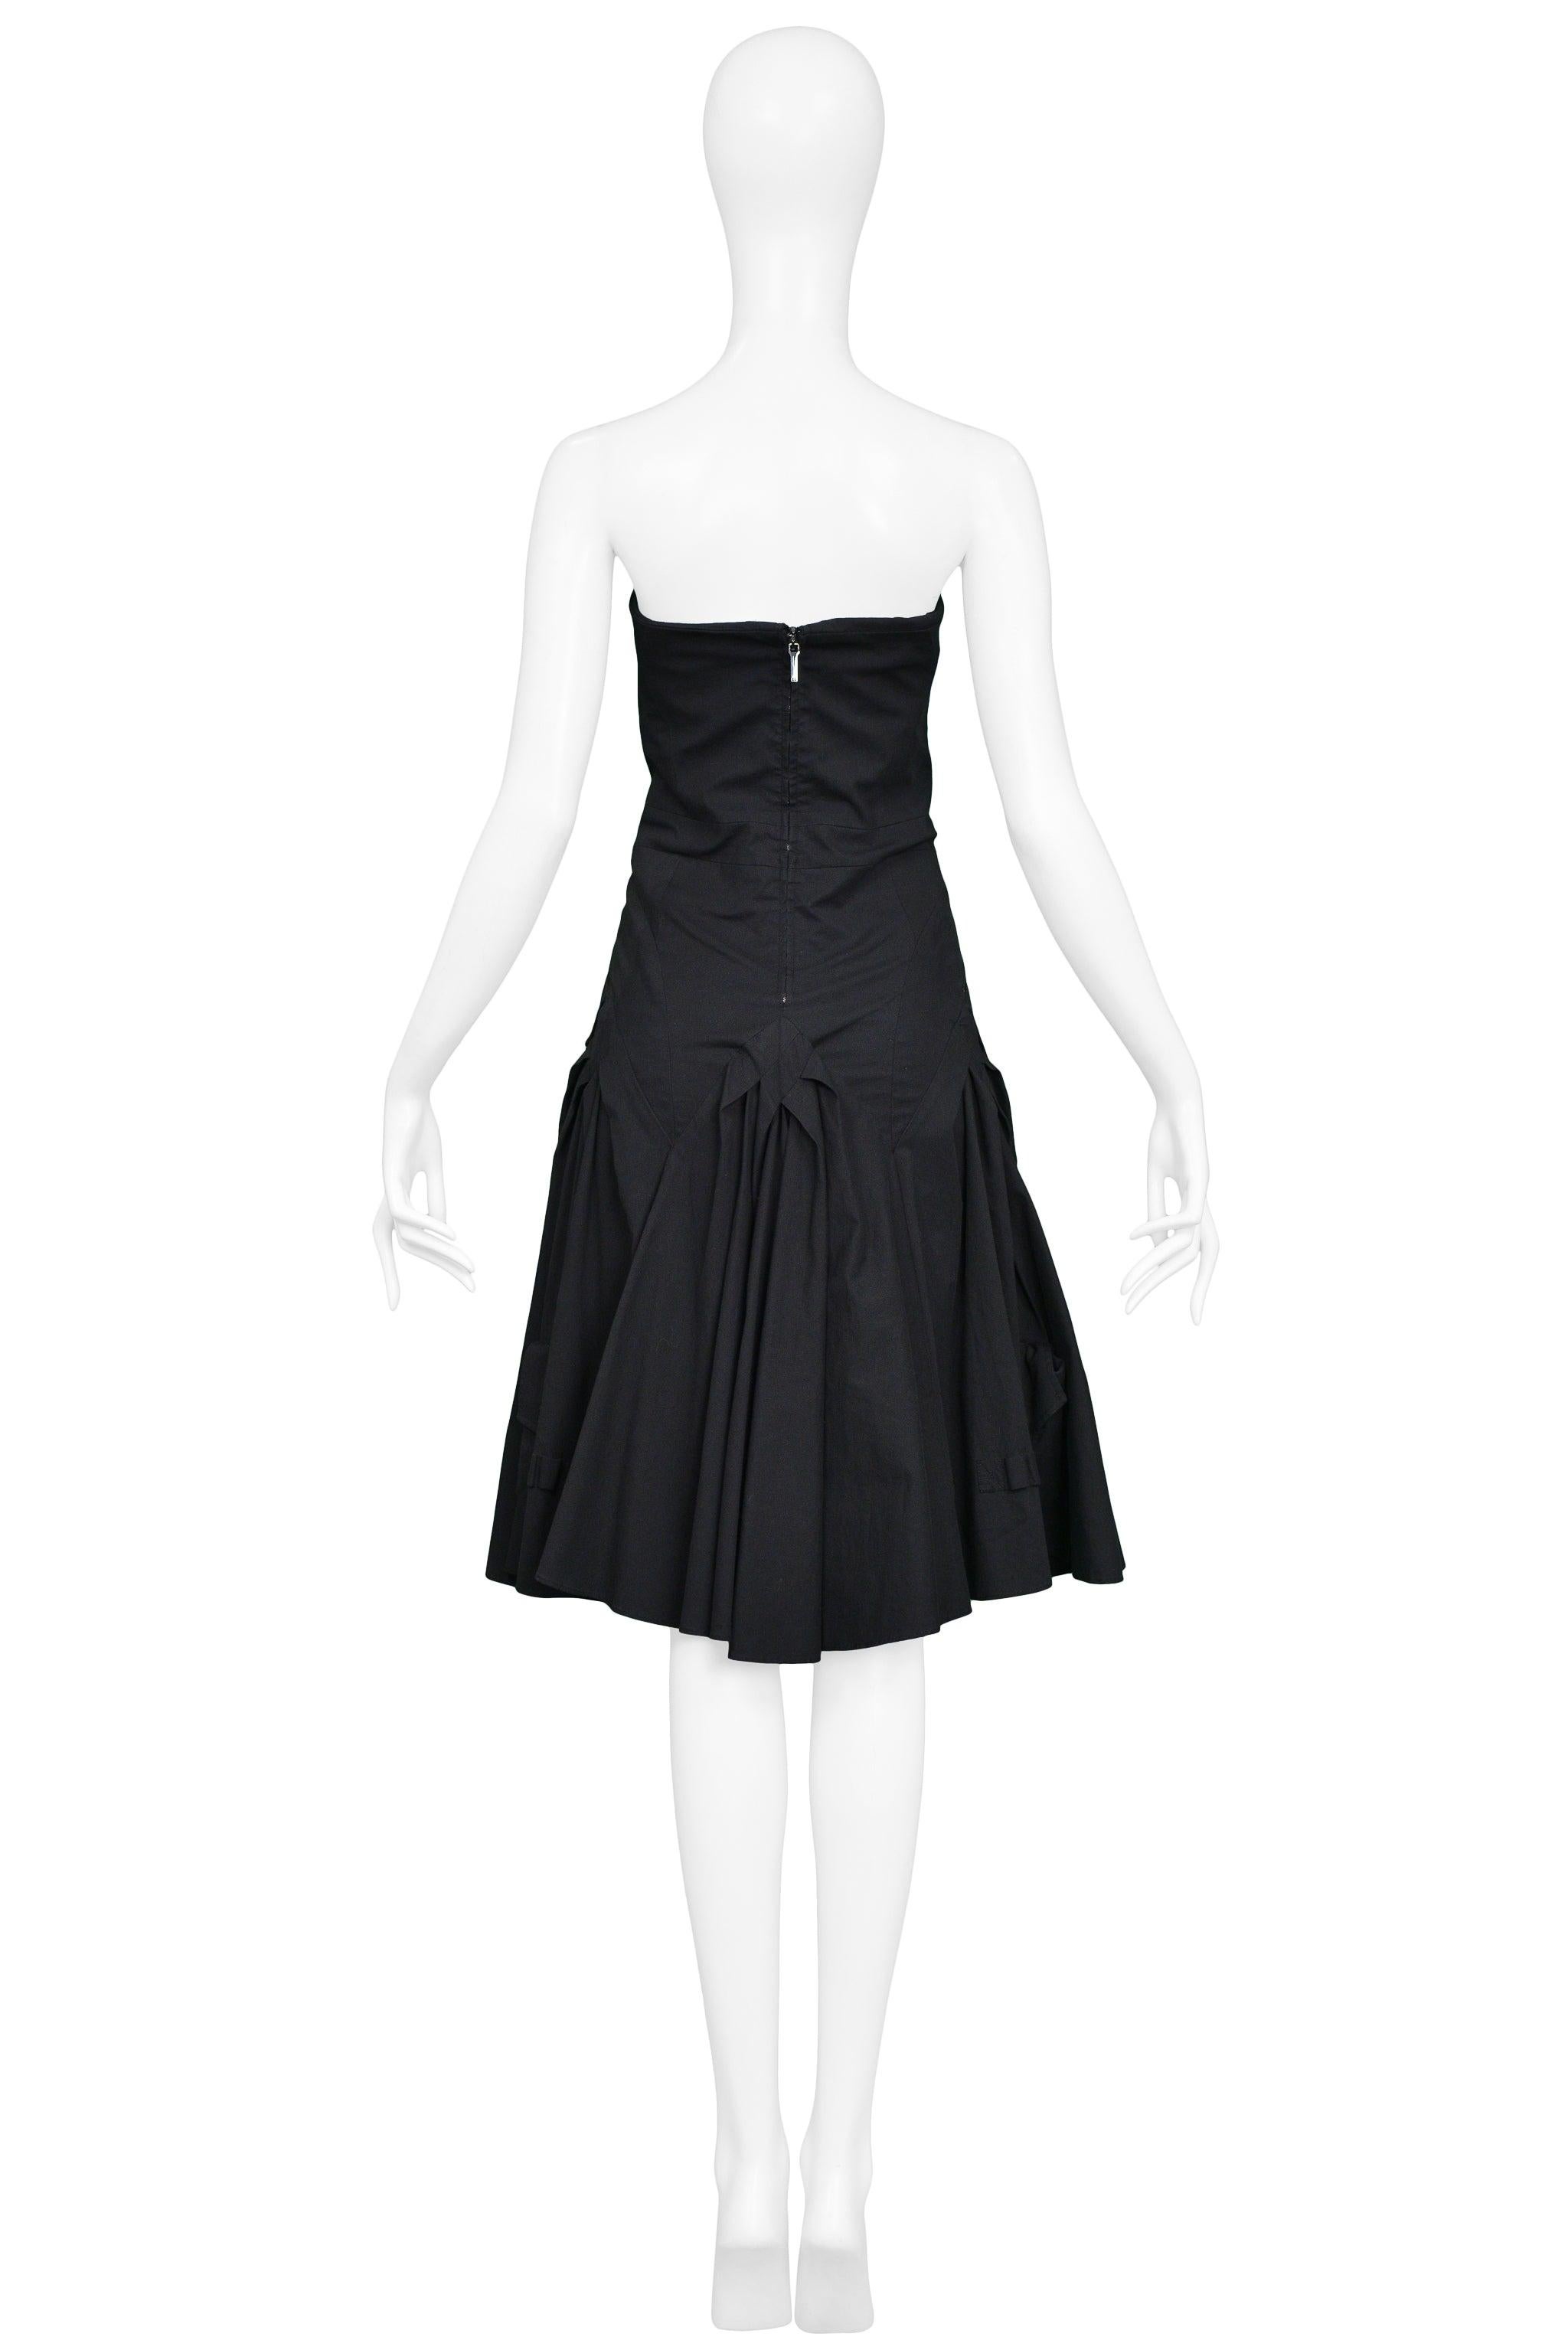 Christian Dior By John Galliano Black Cotton Cargo Dress 2003 For Sale 1